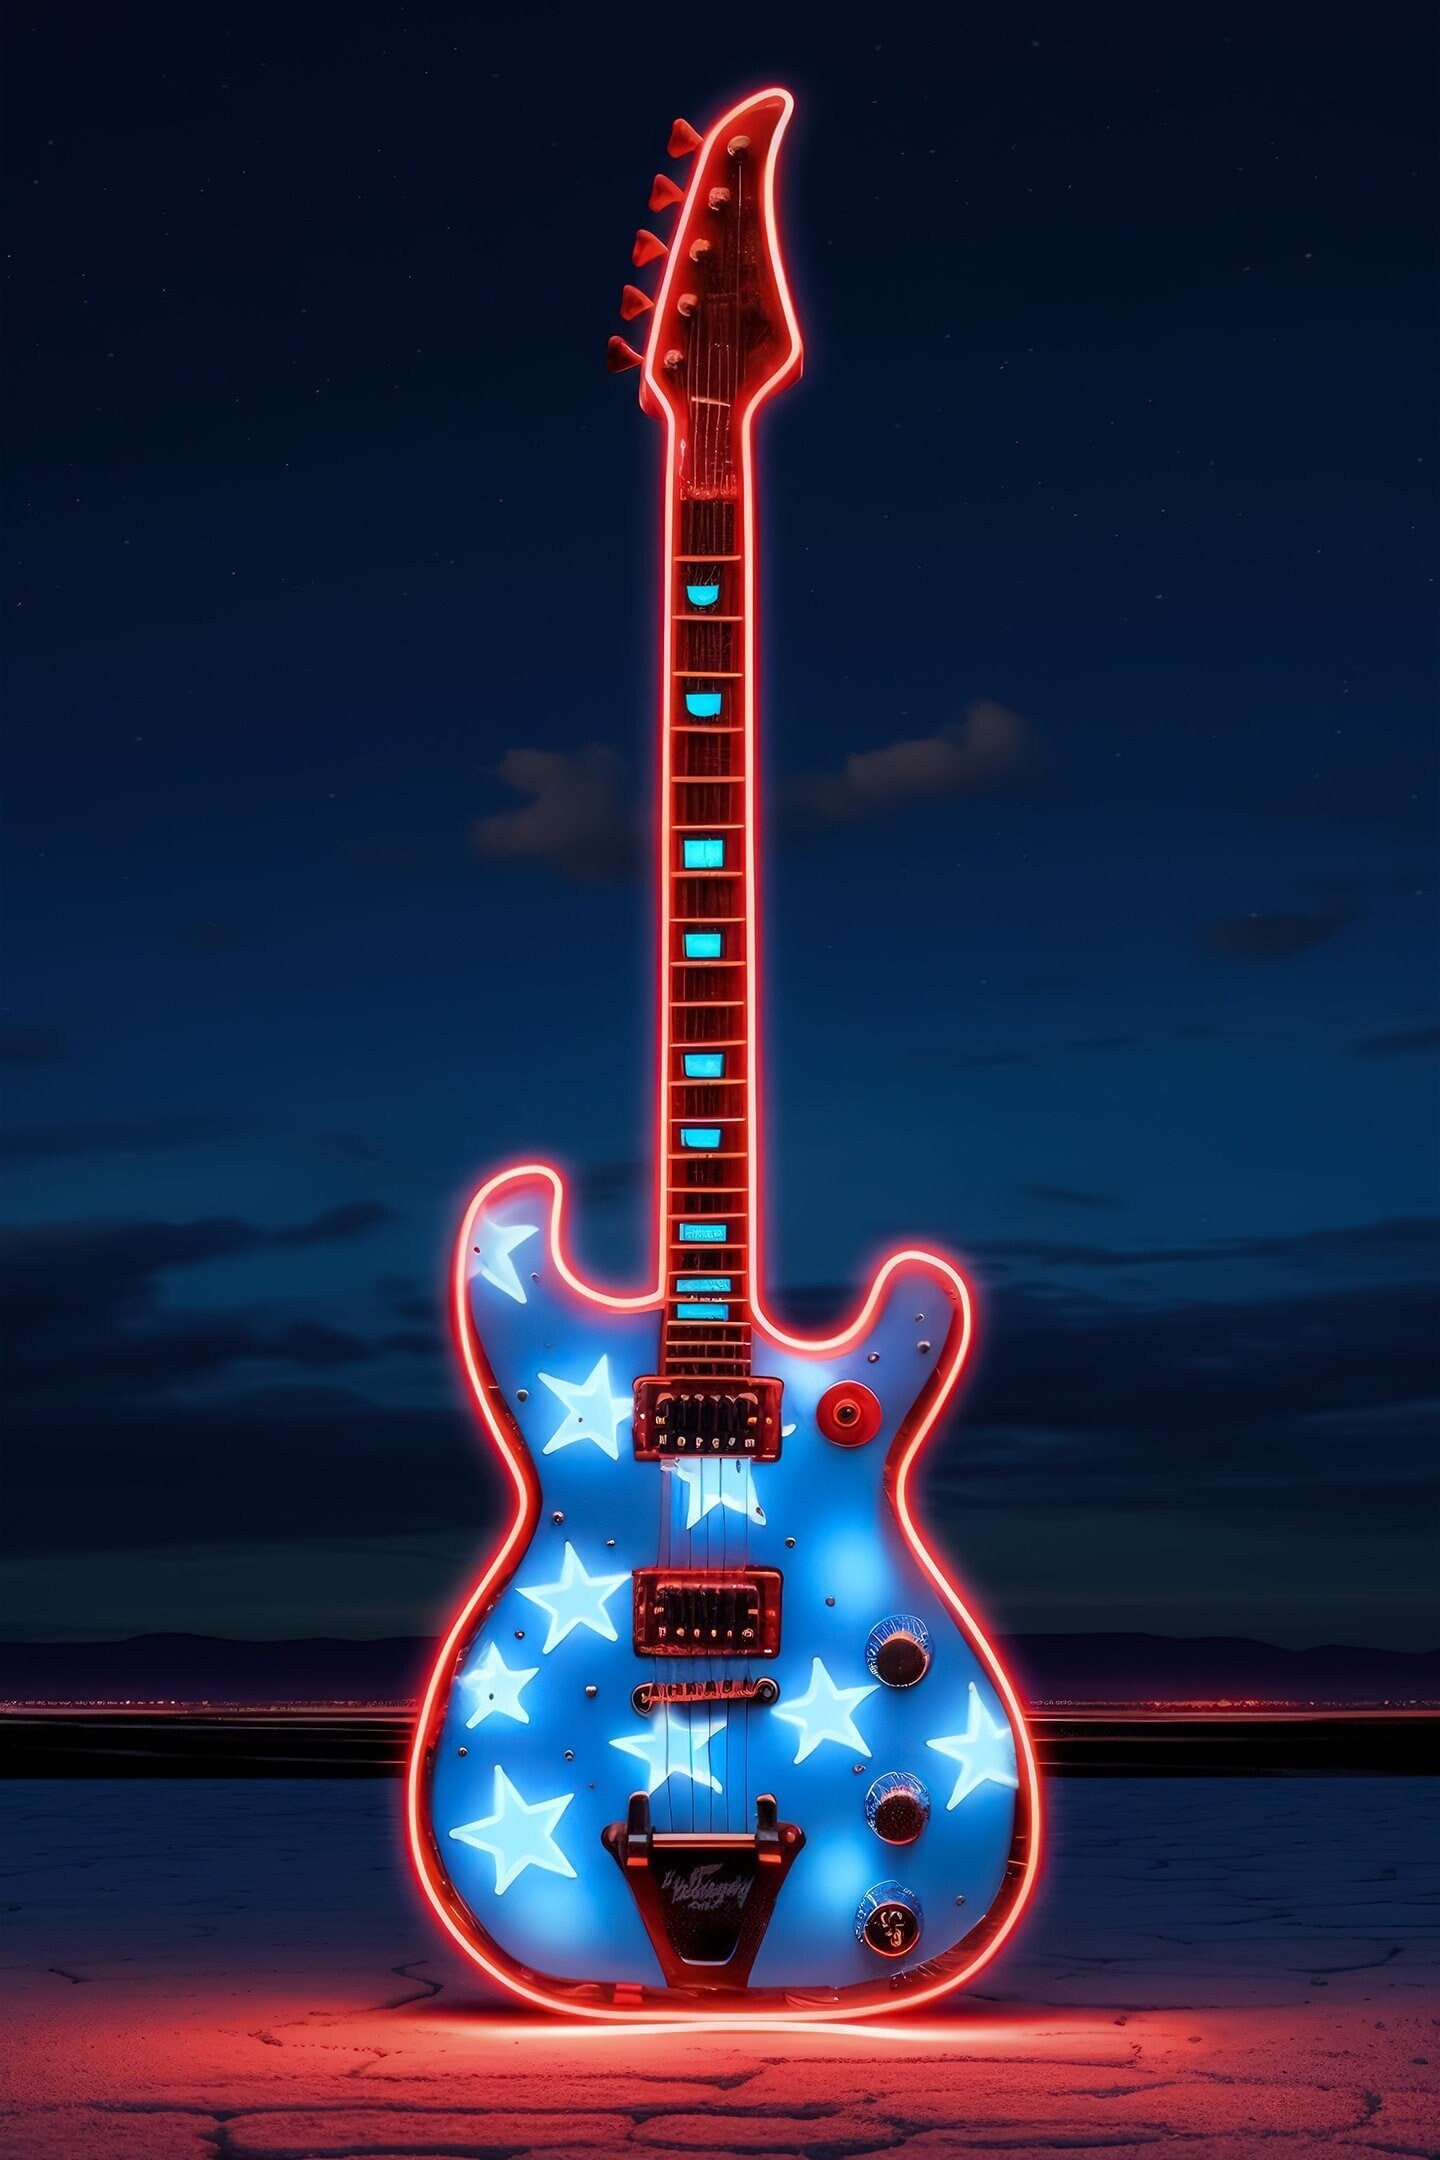 Electric USA | Guitar Art Stars and Stripes God Bless America Neon Music Instrument Modern Canvas Metal Prints Decor